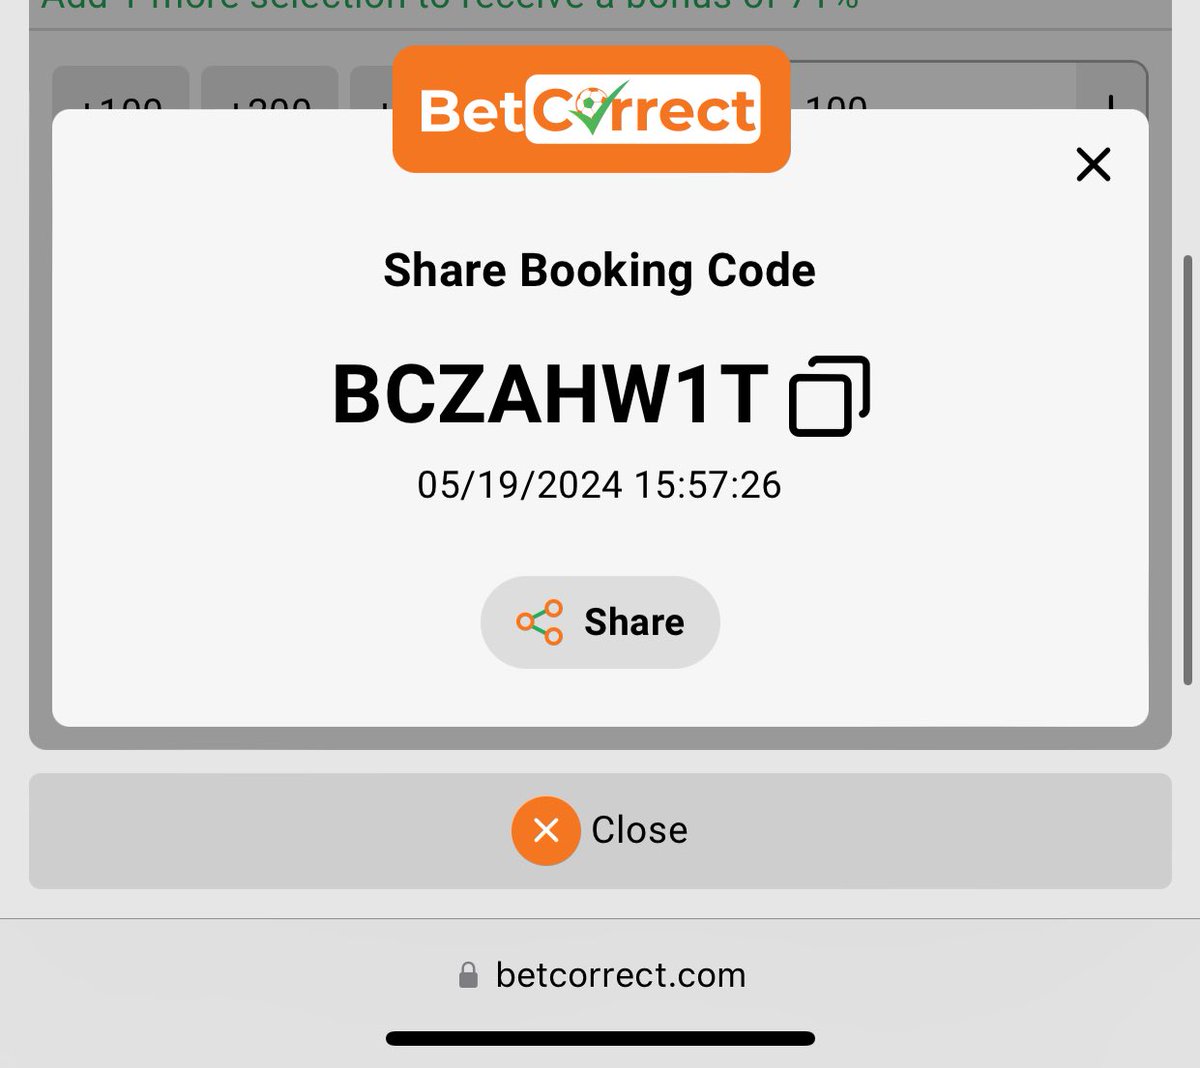 900 ODDS ON BETCORRECT @BetcorrectNG 

CODE : BCZAHW1T ||

REGISTER BETCORRECT USING THE LINK BELOW 👇 👇
bit.ly/RealSuzzane_

✅NO PROMO CODE NEEDED